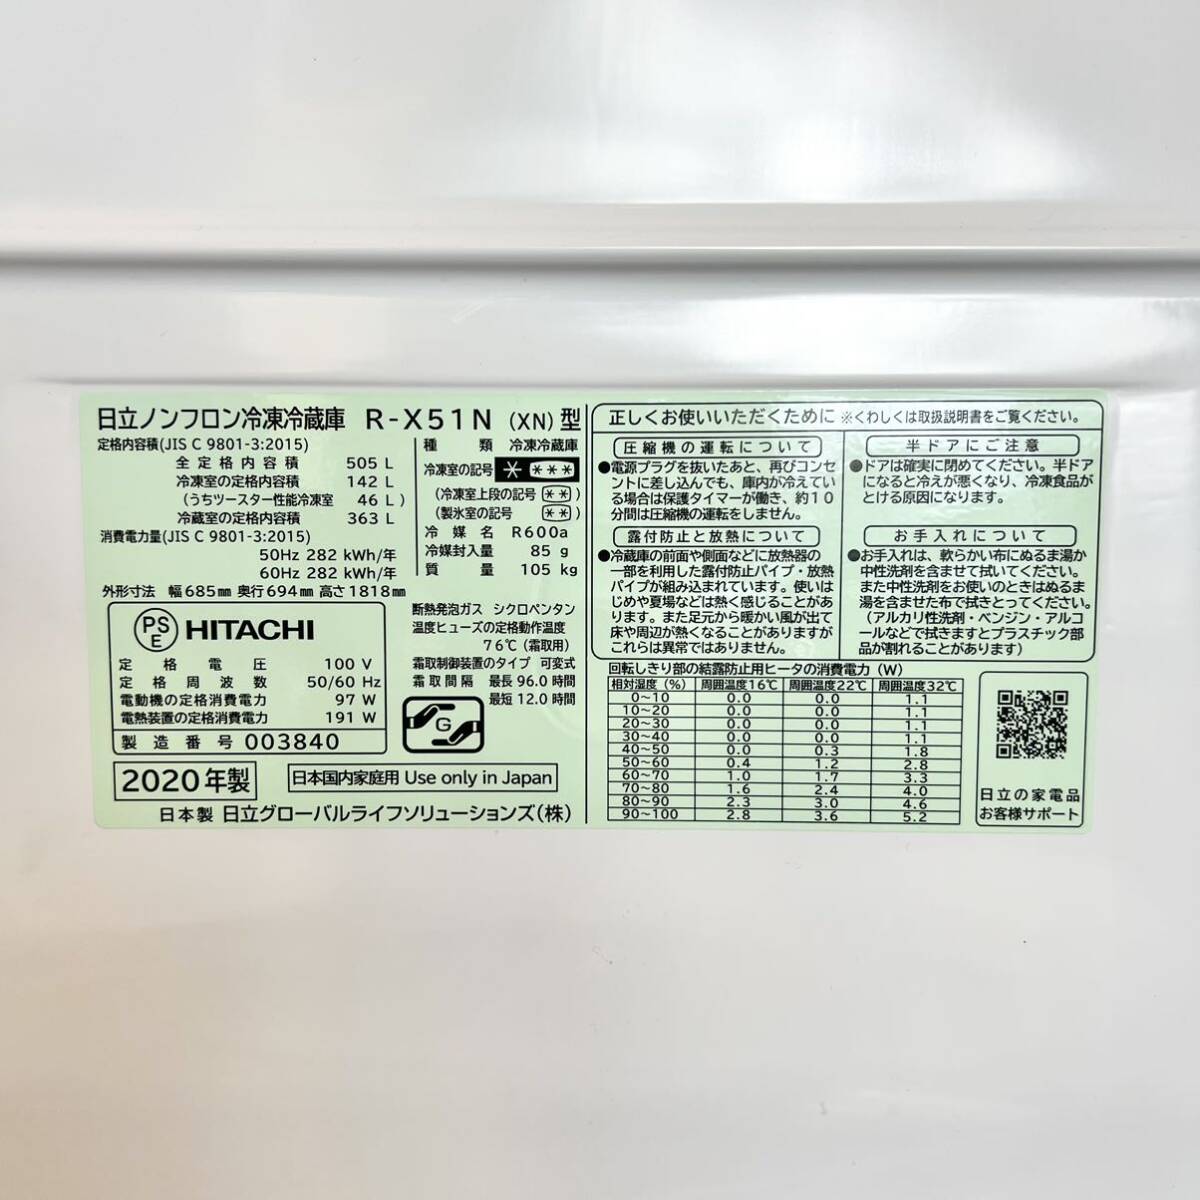 214* secondhand goods HITACHI Hitachi 2020 year R-X51N 505L 6do Anon freon freezing refrigerator operation verification ending *